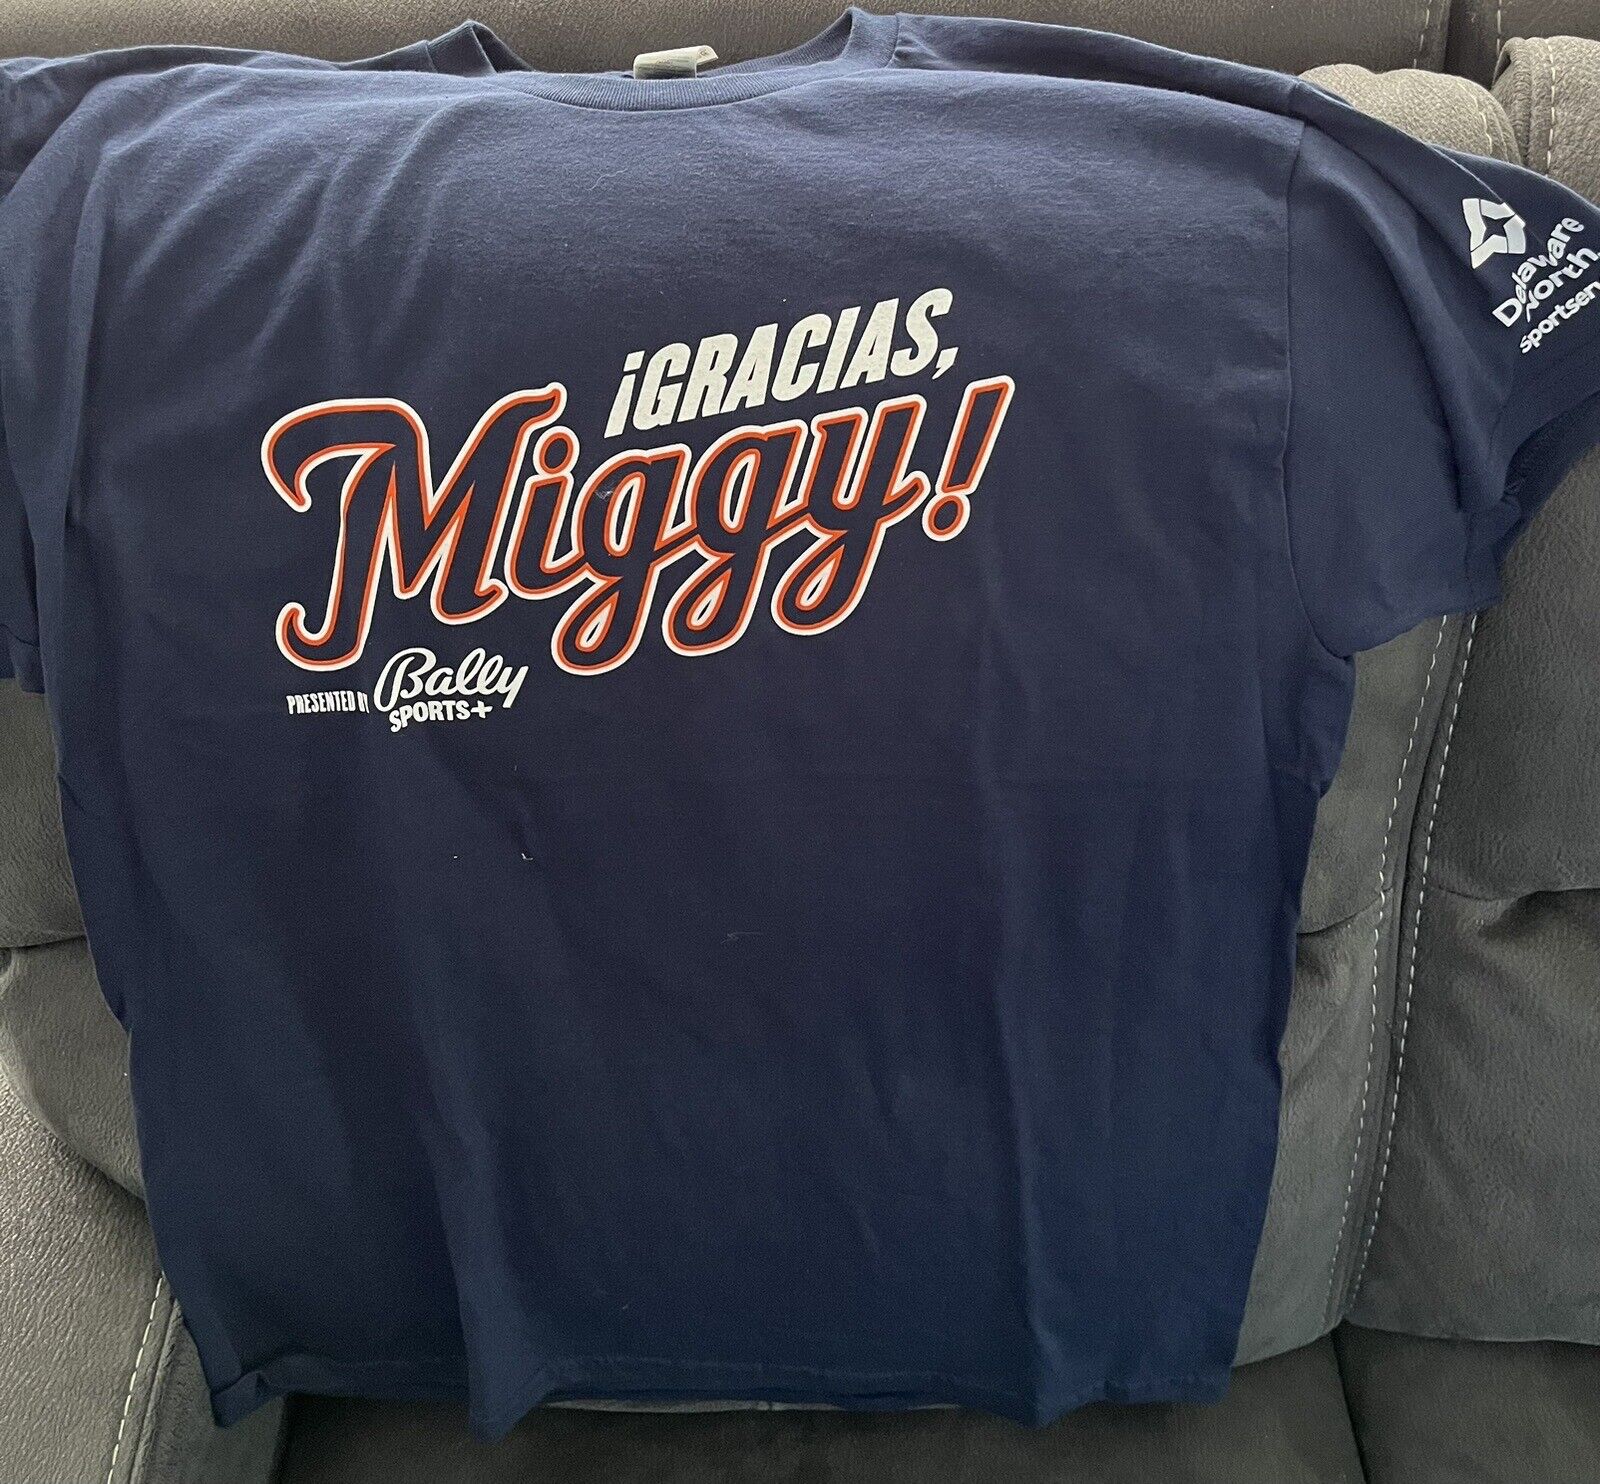 Gratis Miguel Cabrera Tshirt Size Large Brand New